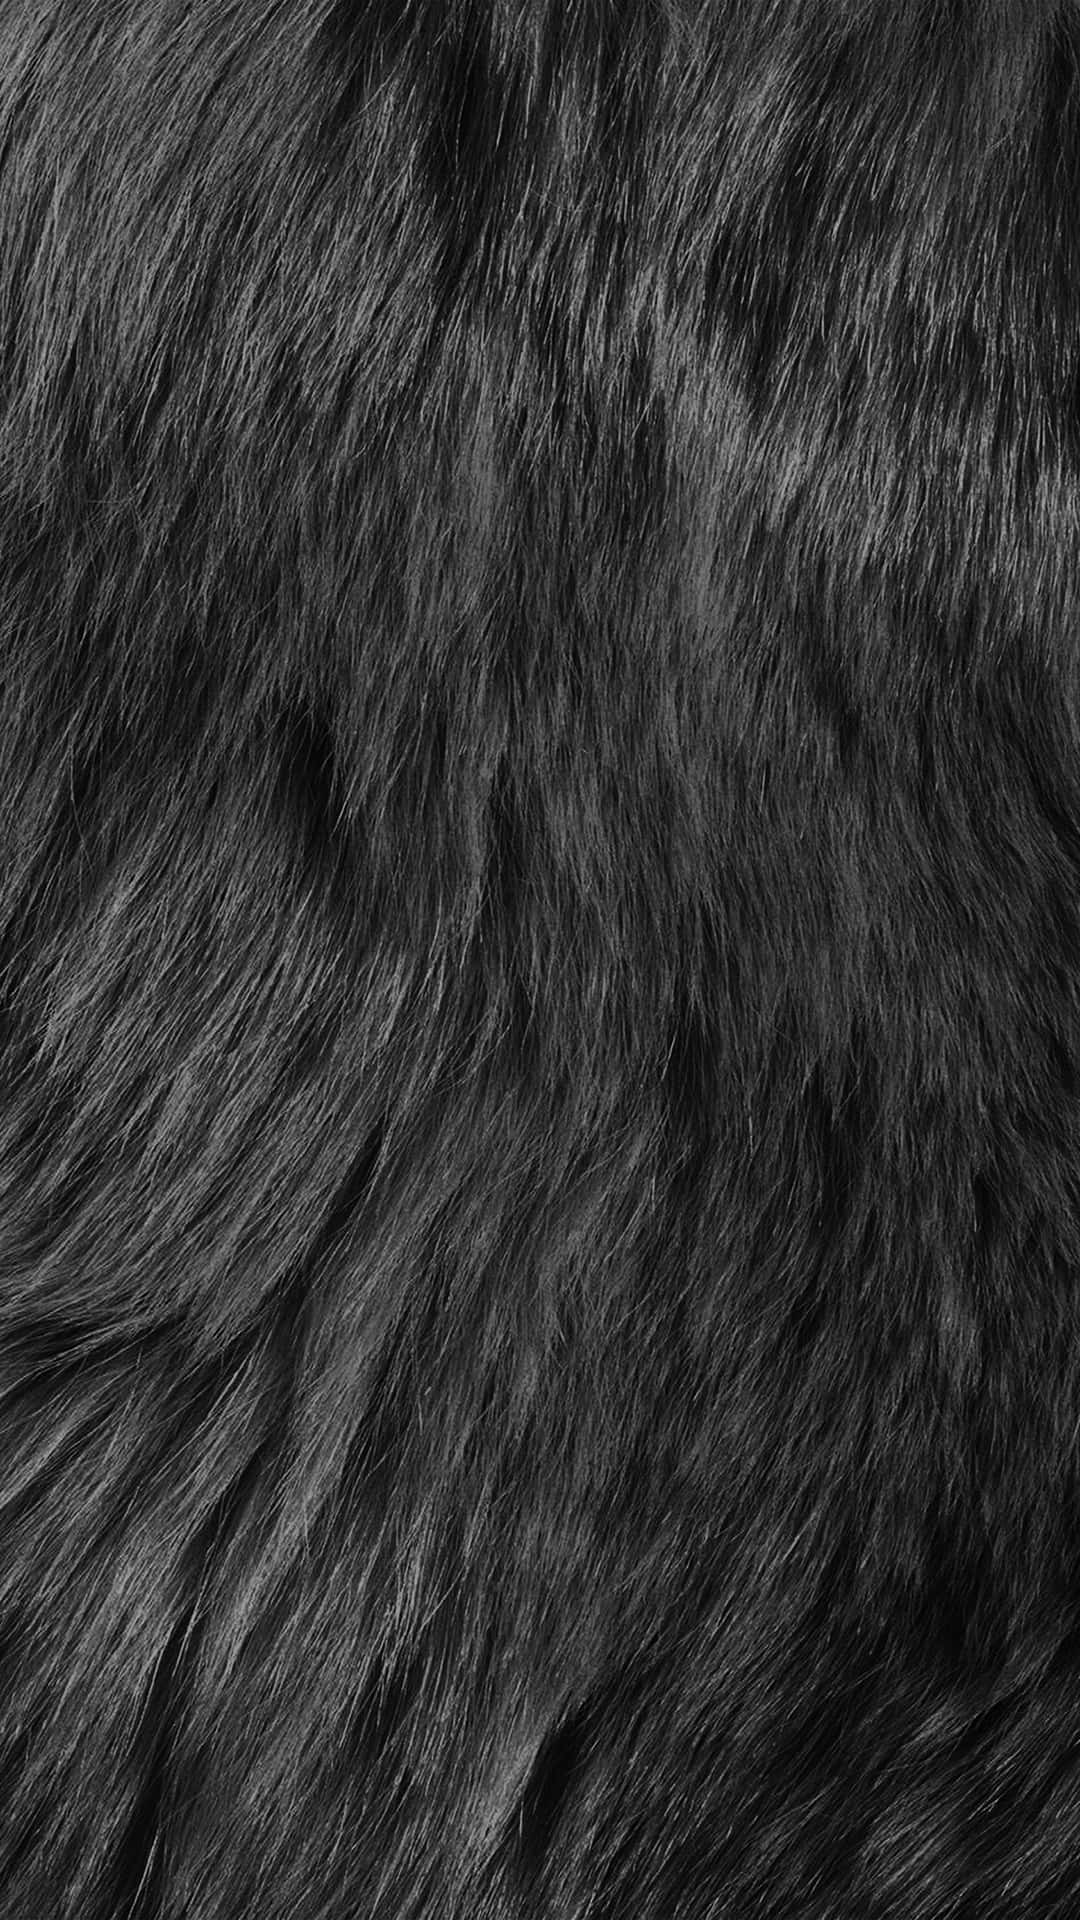 Fuzzy Wavy Hair Wallpaper